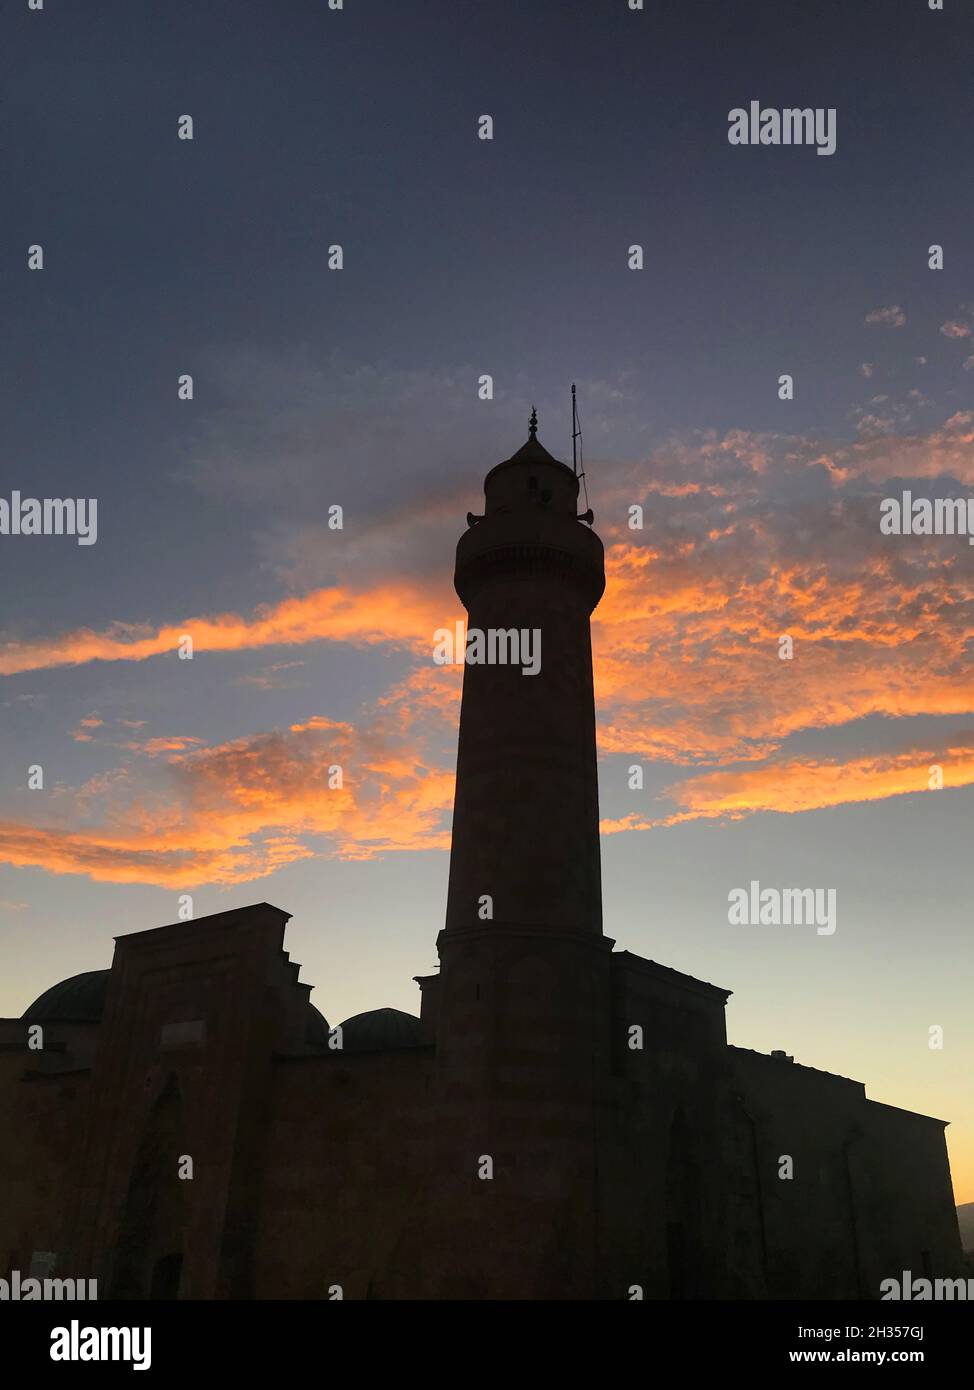 Alaaddin Mosque silhouette at Nigde city center in Central Anatolia, Turkey. Stock Photo